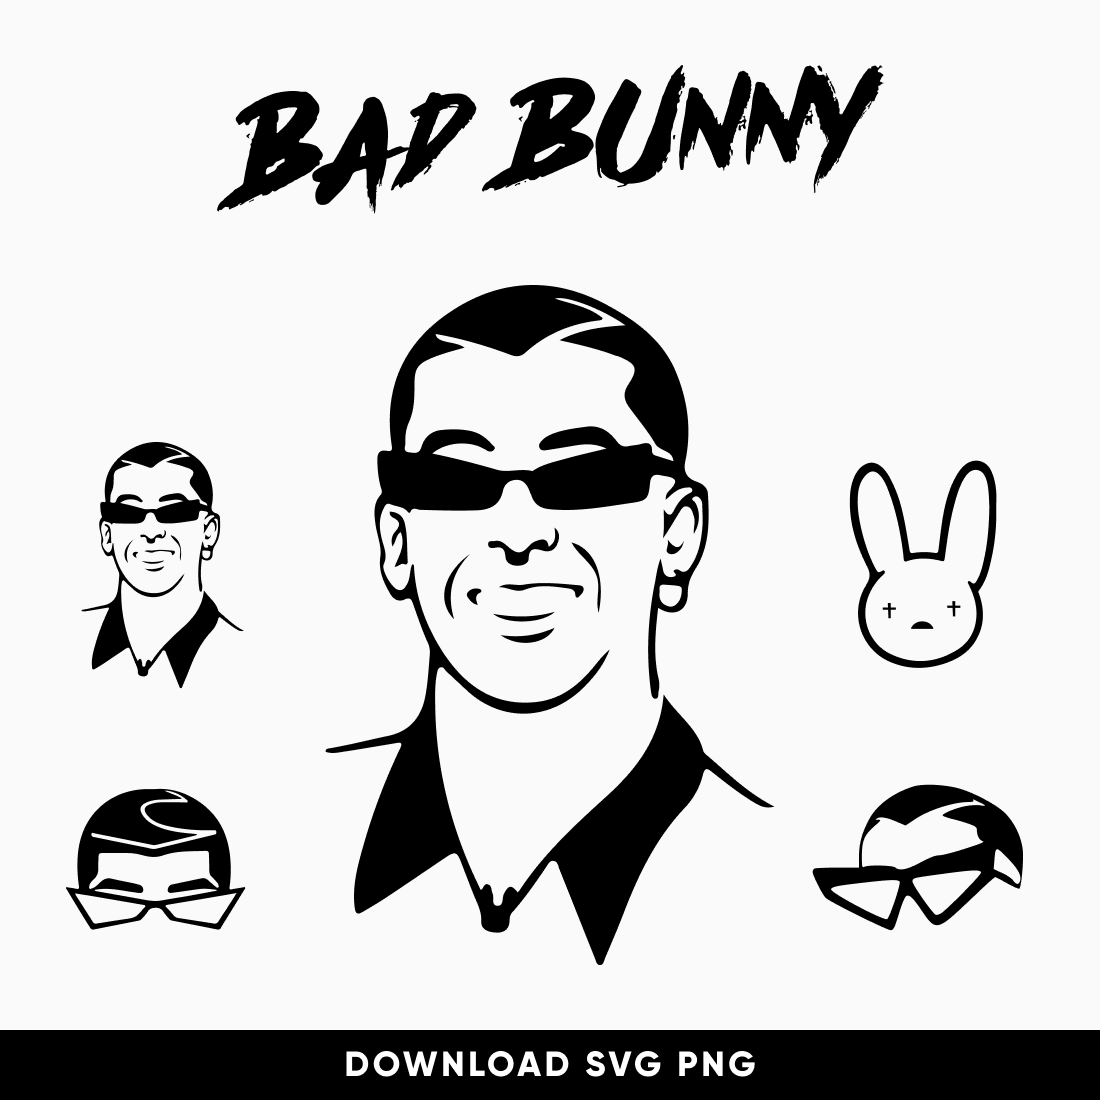 Bad bunny svg bundle main cover.